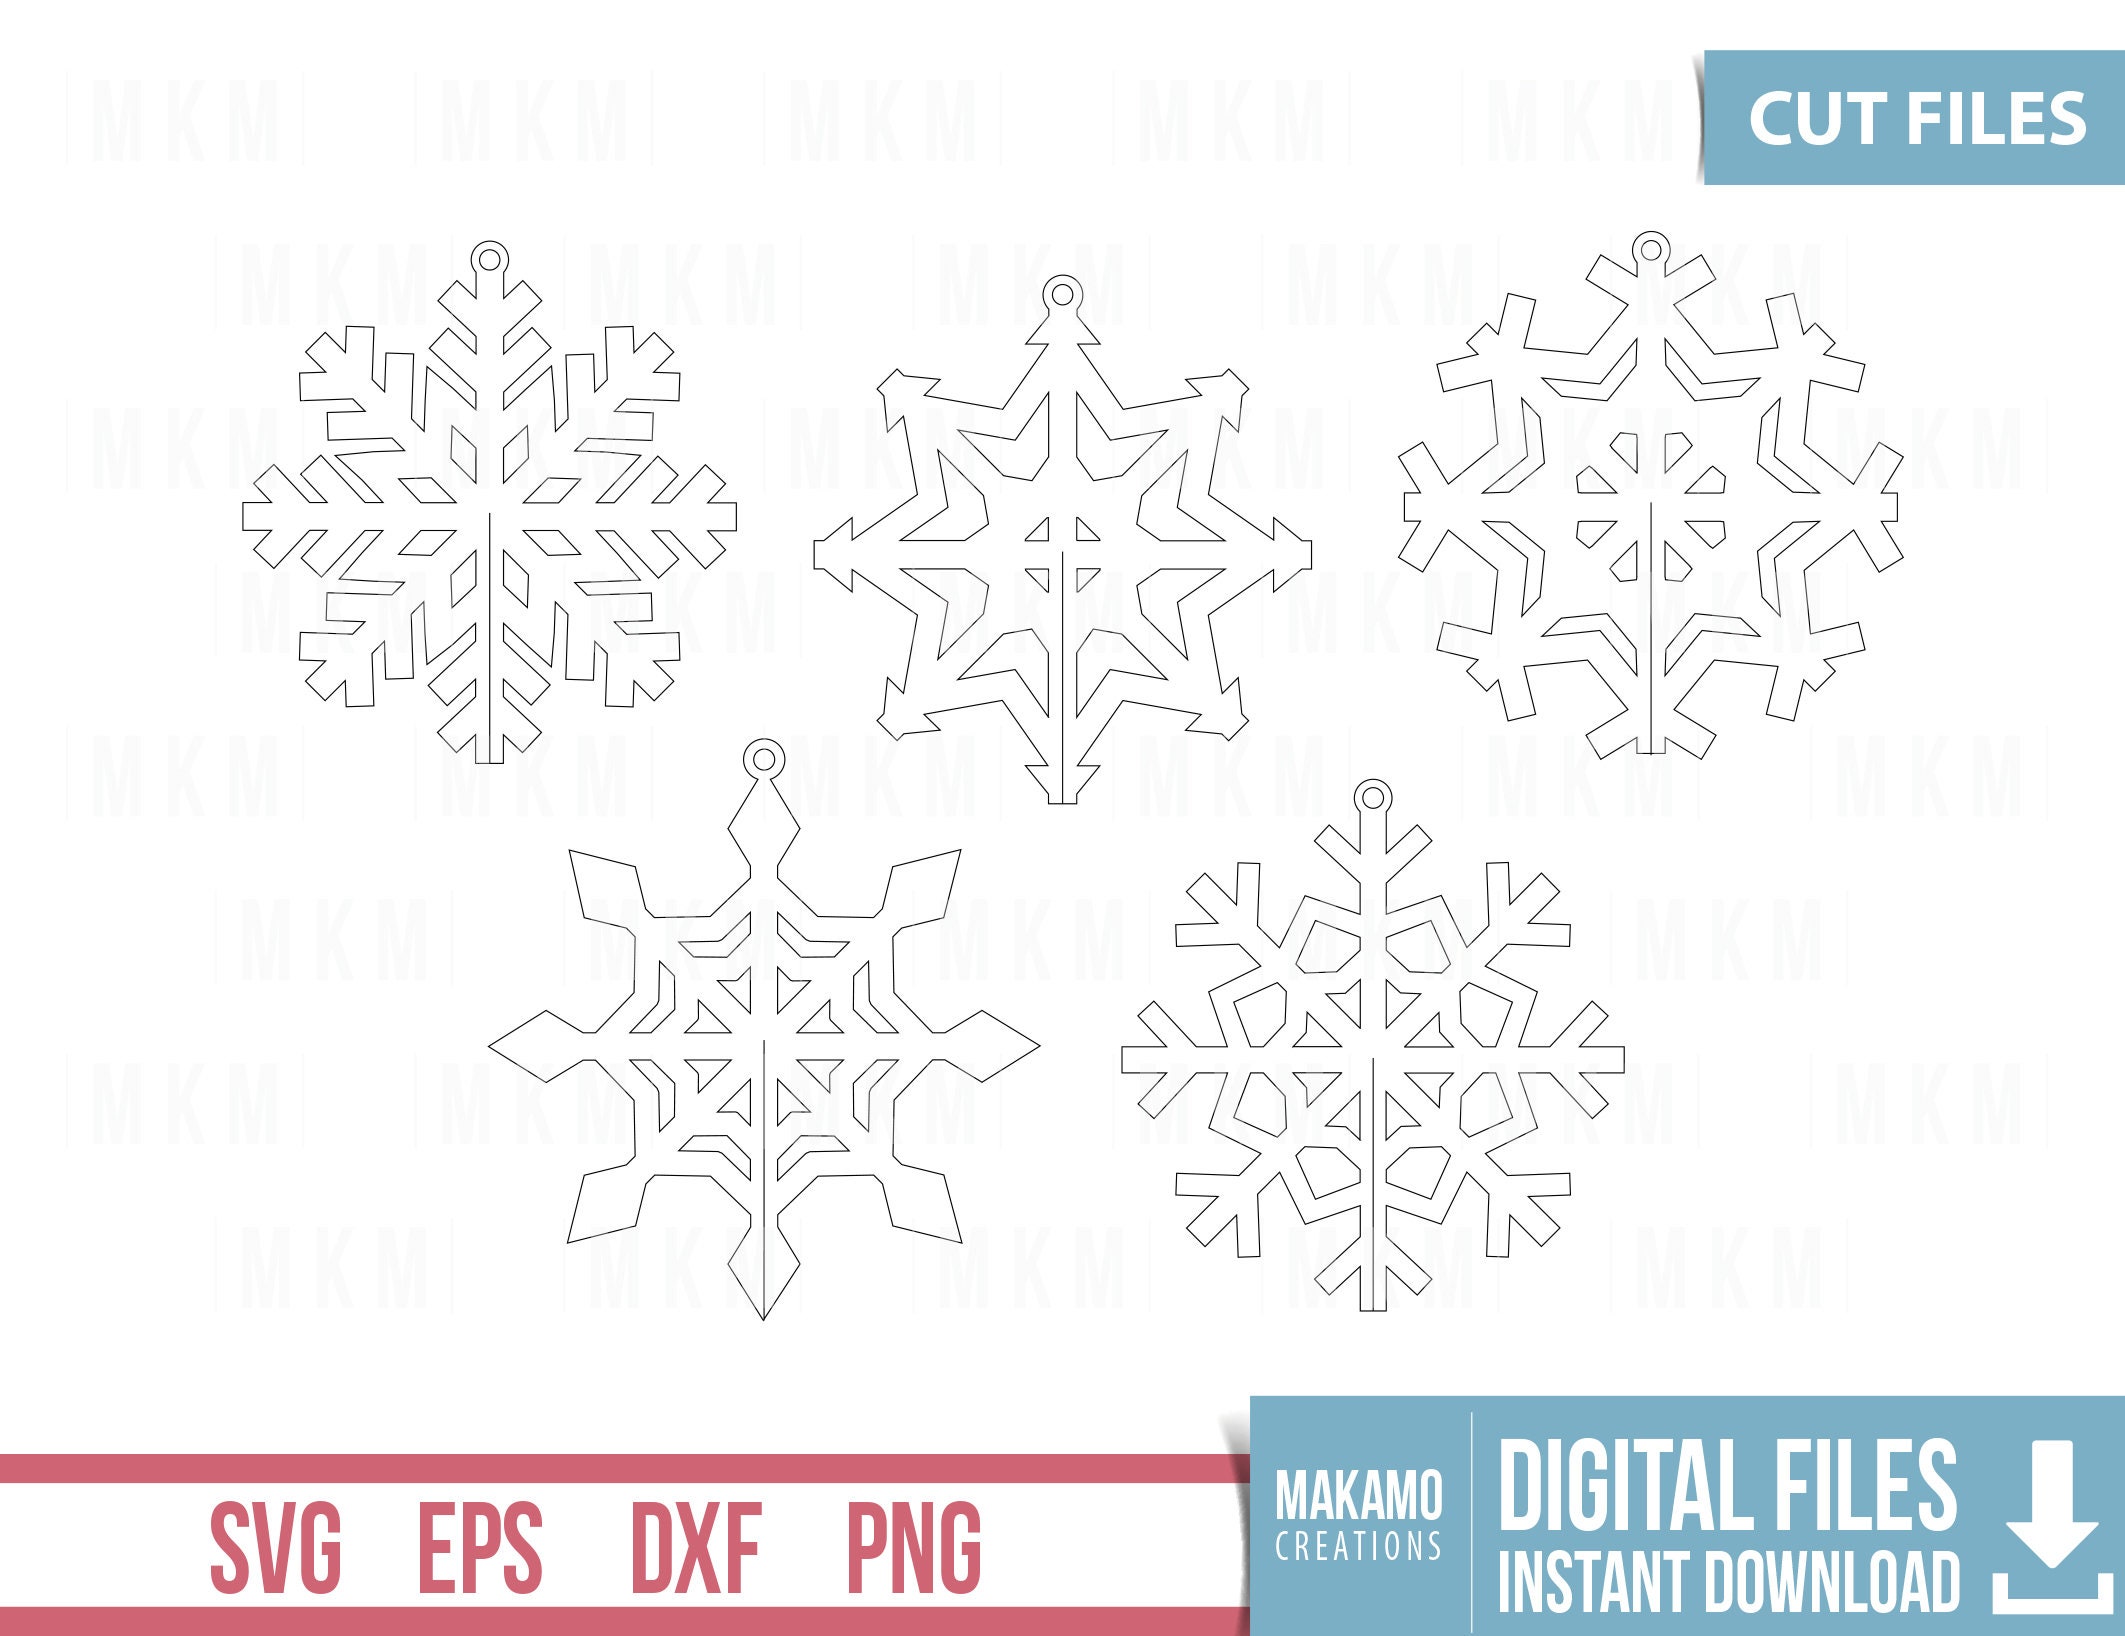 3D Paper Snowflakes Template – Easy Peasy and Fun Membership